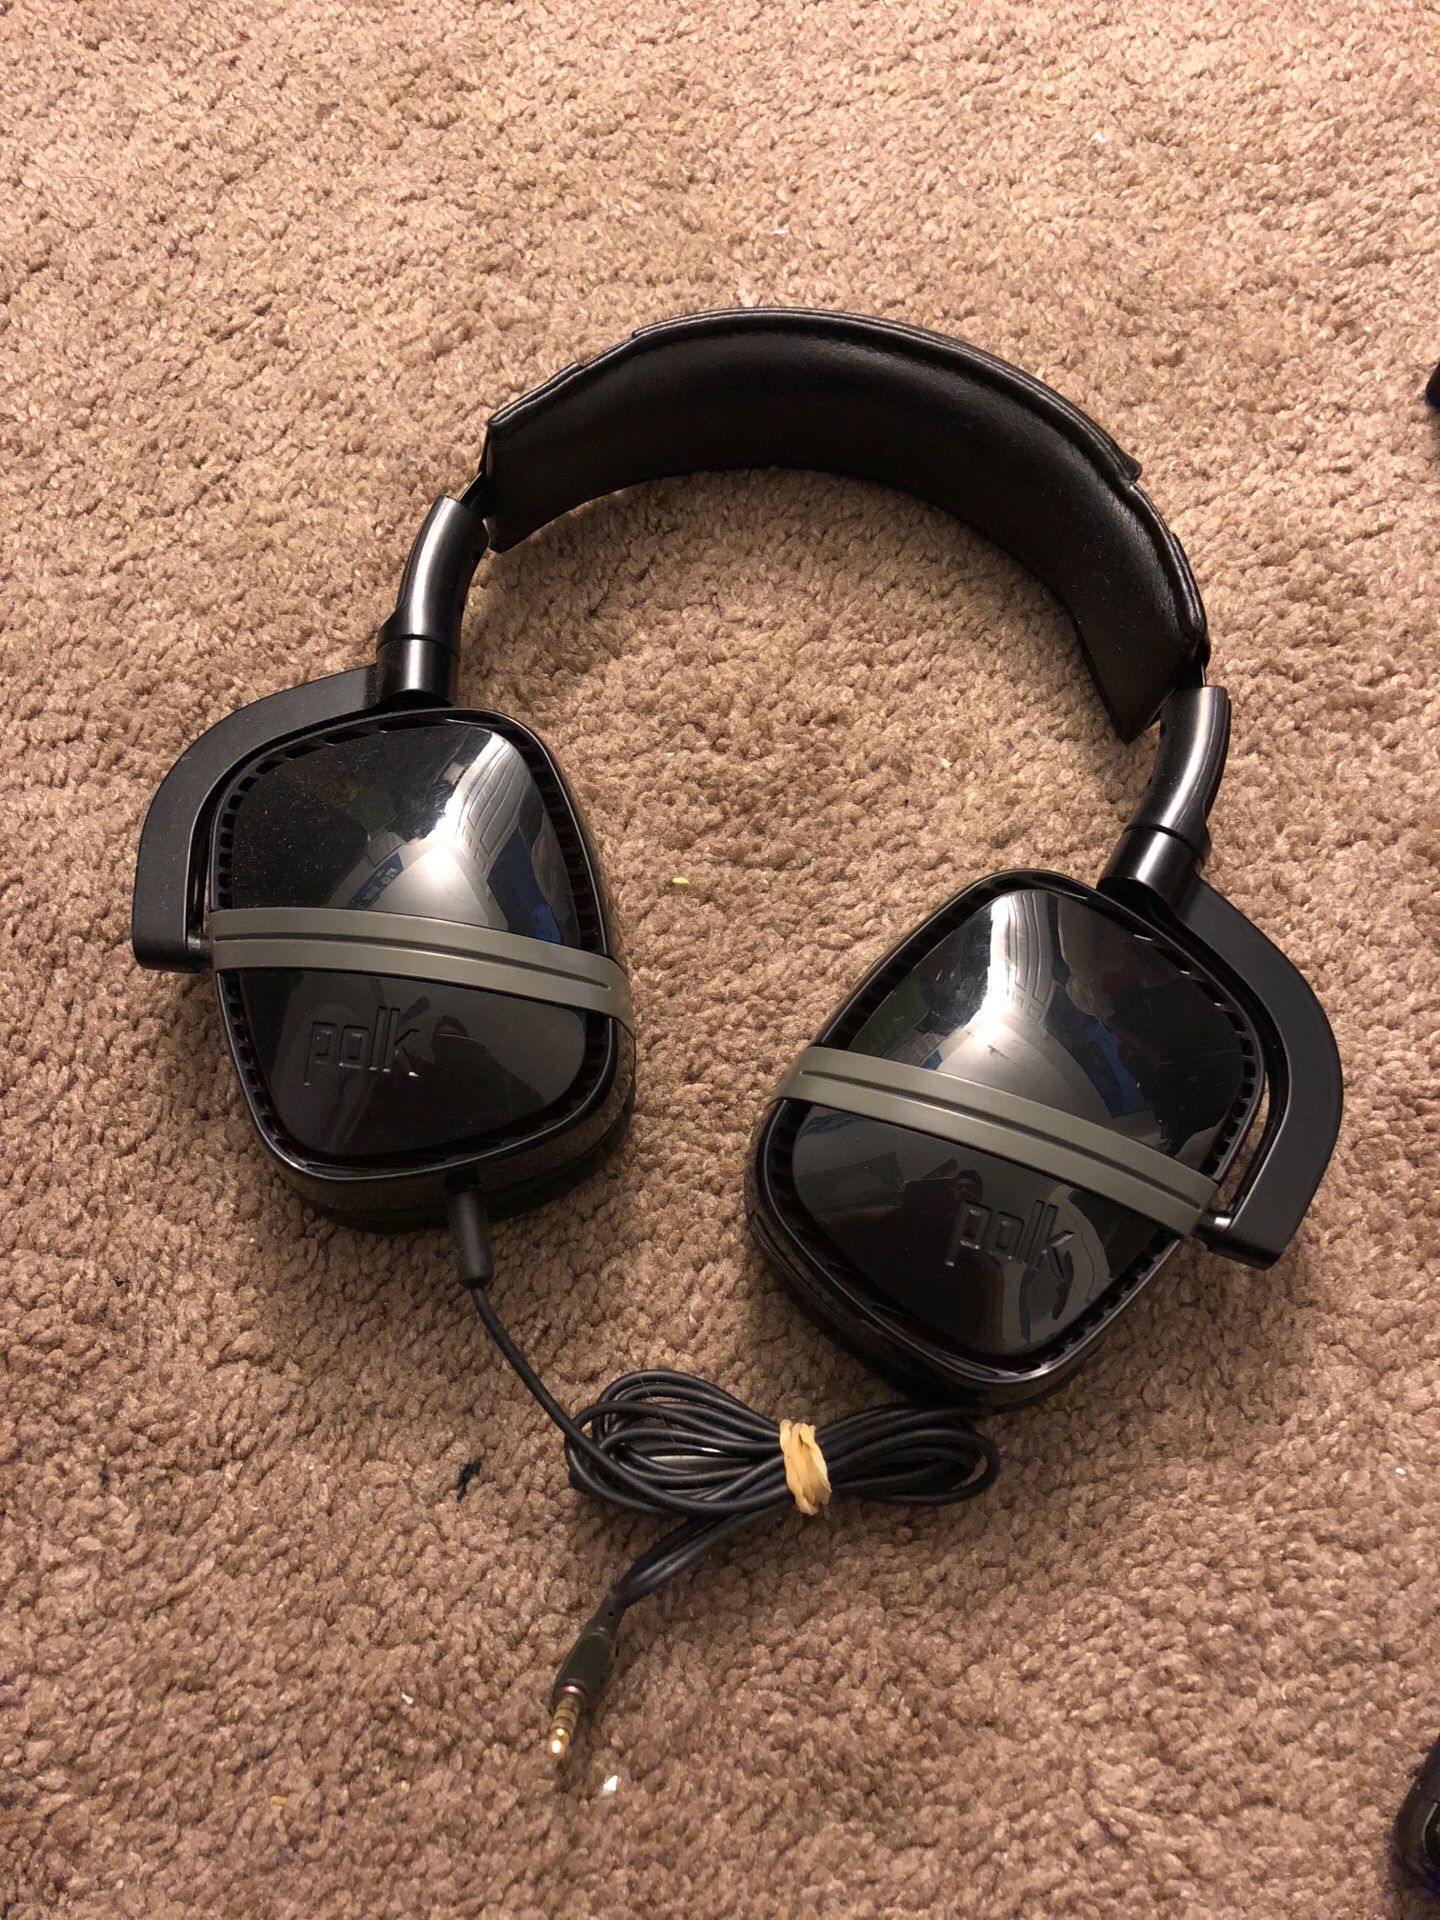 Polk Audio Striker Pro headphones